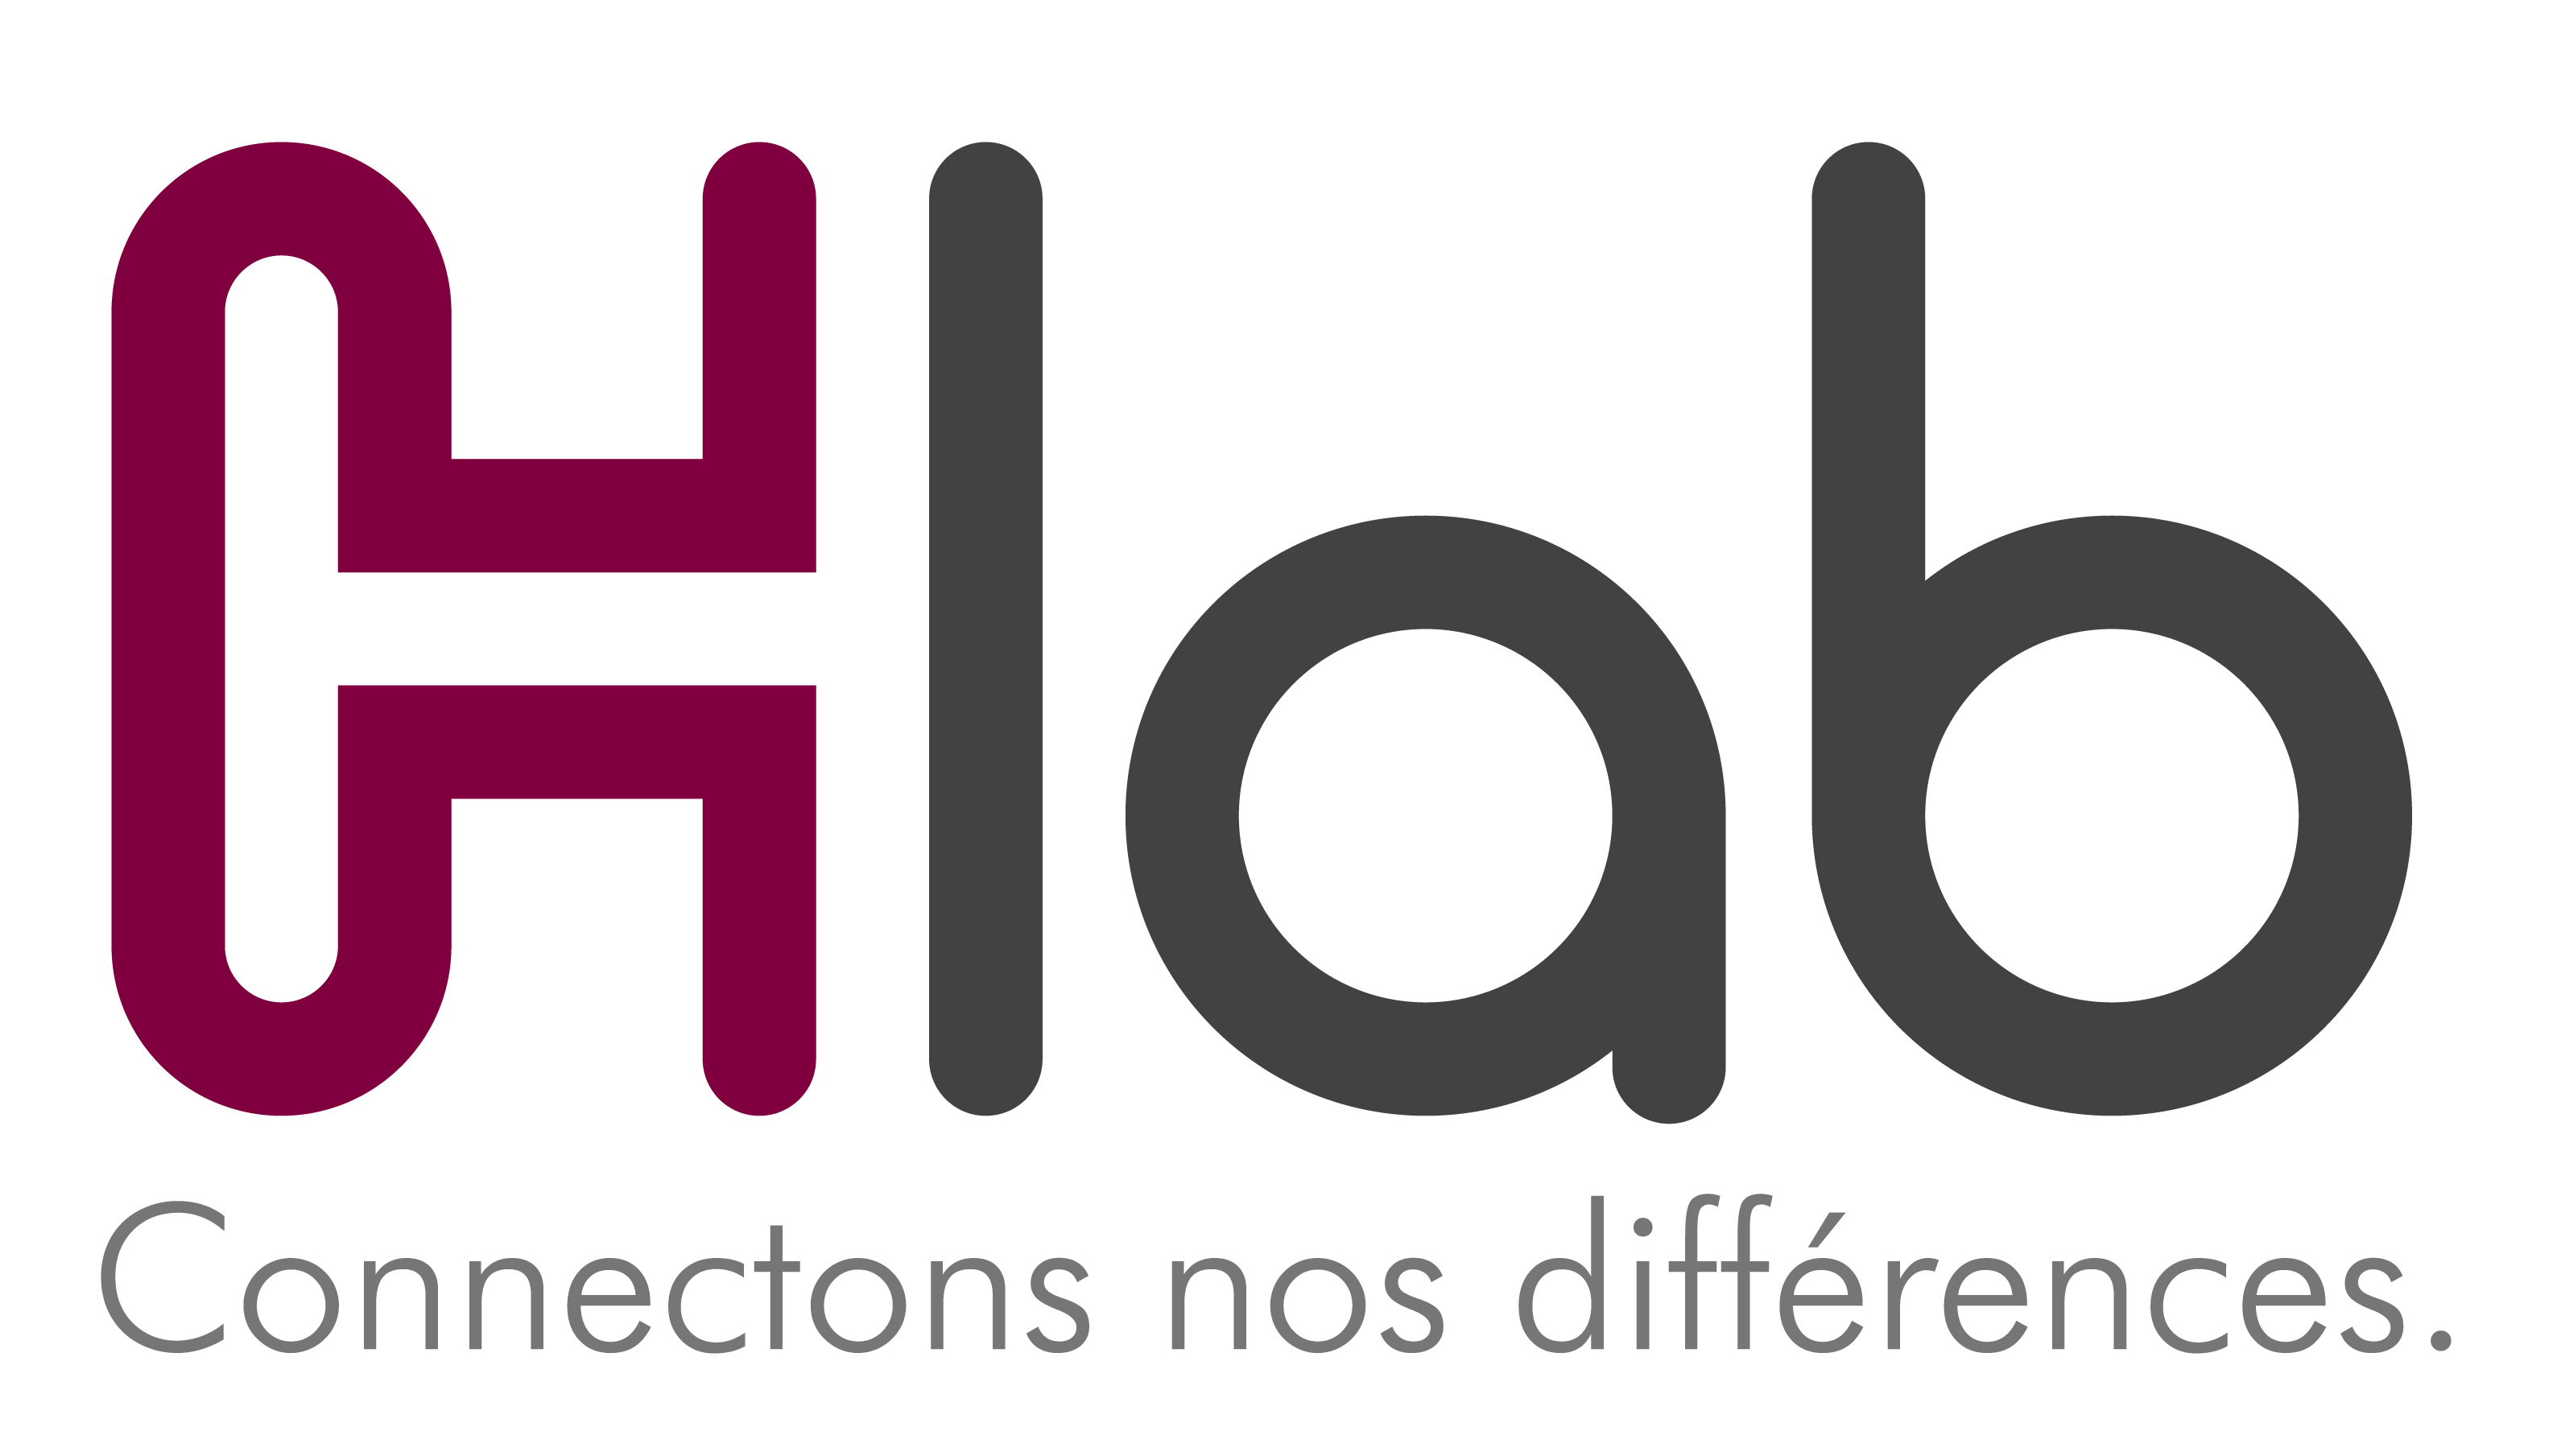 Hlab - Connectons nos différences